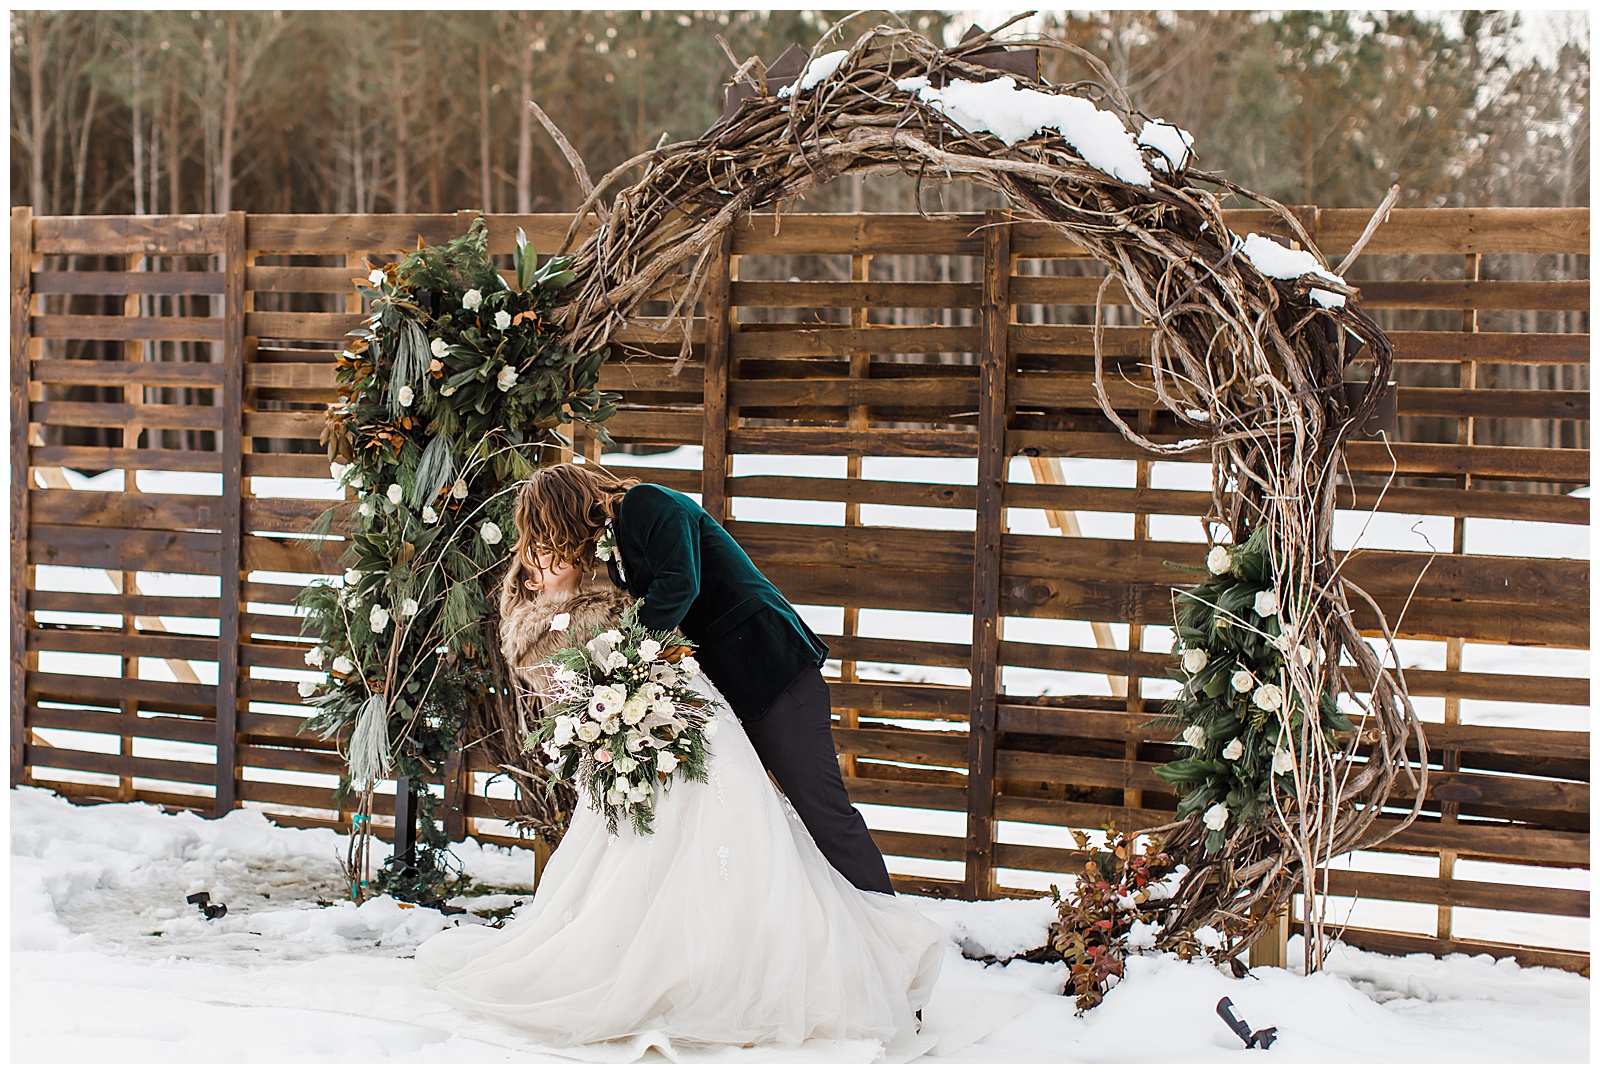 antebellum-of-new-kent-winter-wedding-inspiration-ch-sh-fredericks-photography_0035.jpg